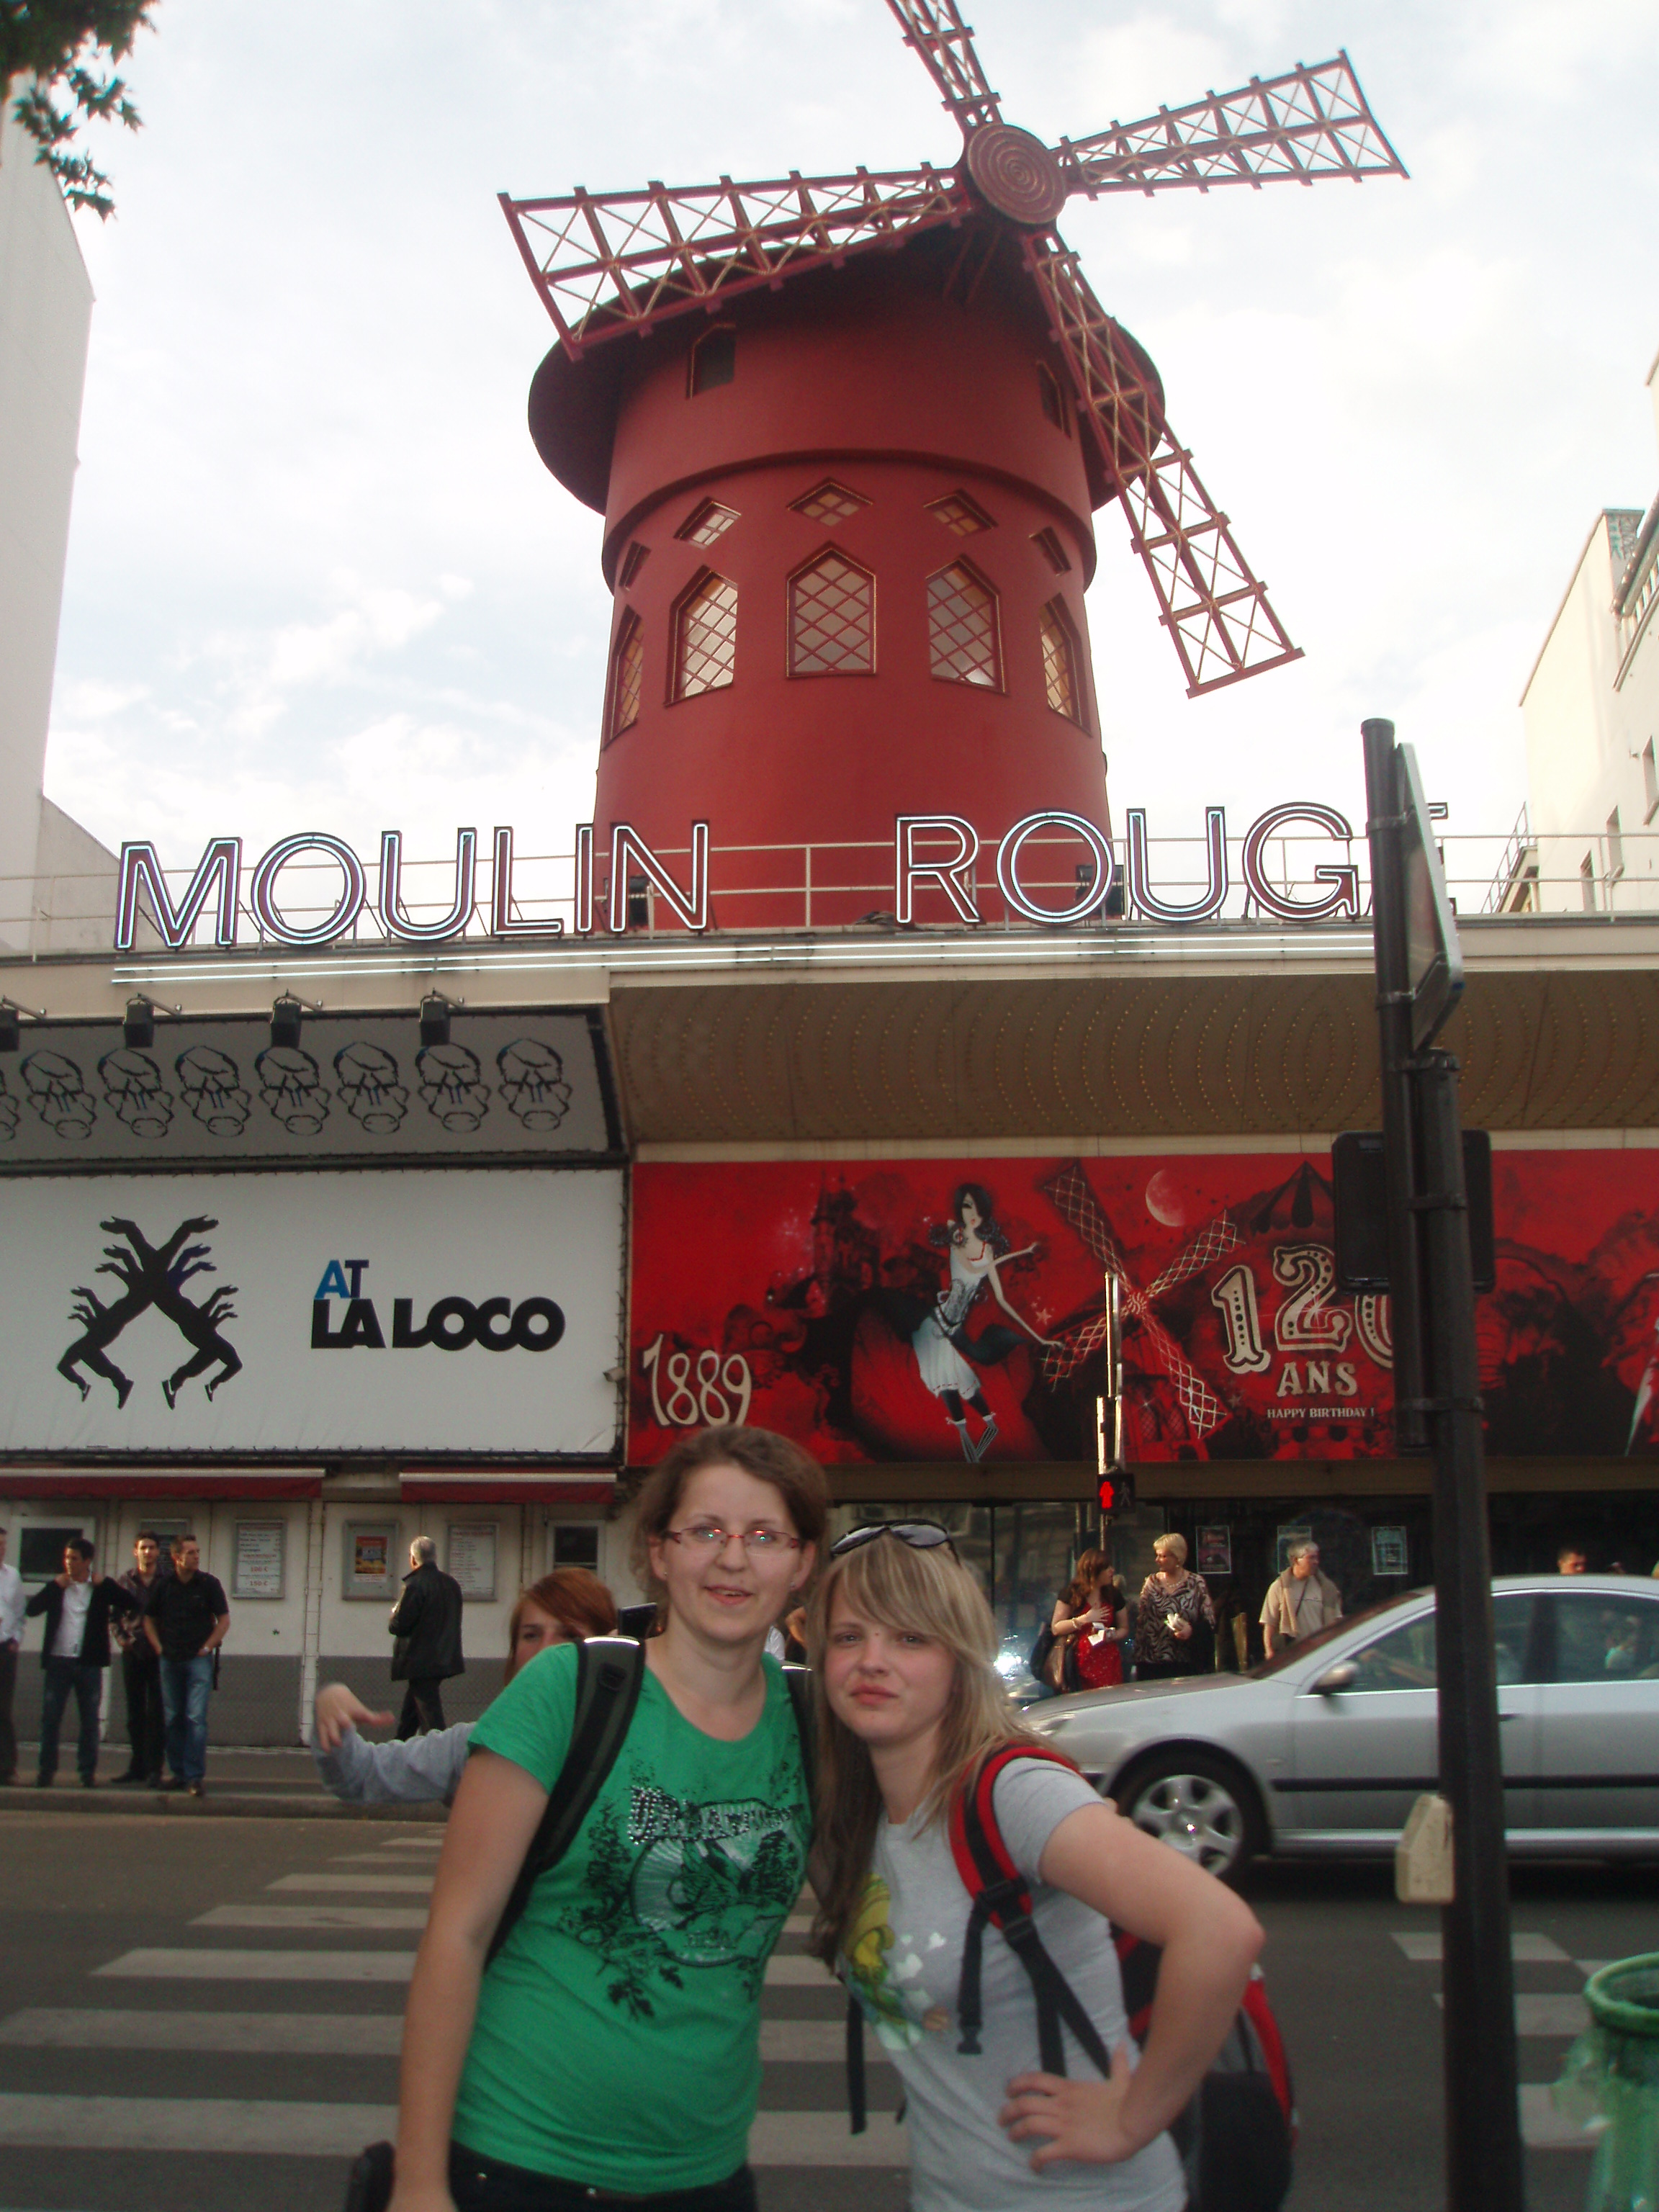 Maťťťaaa(ľavo) a ja(pravo)...moulin rouge...:D:D:D